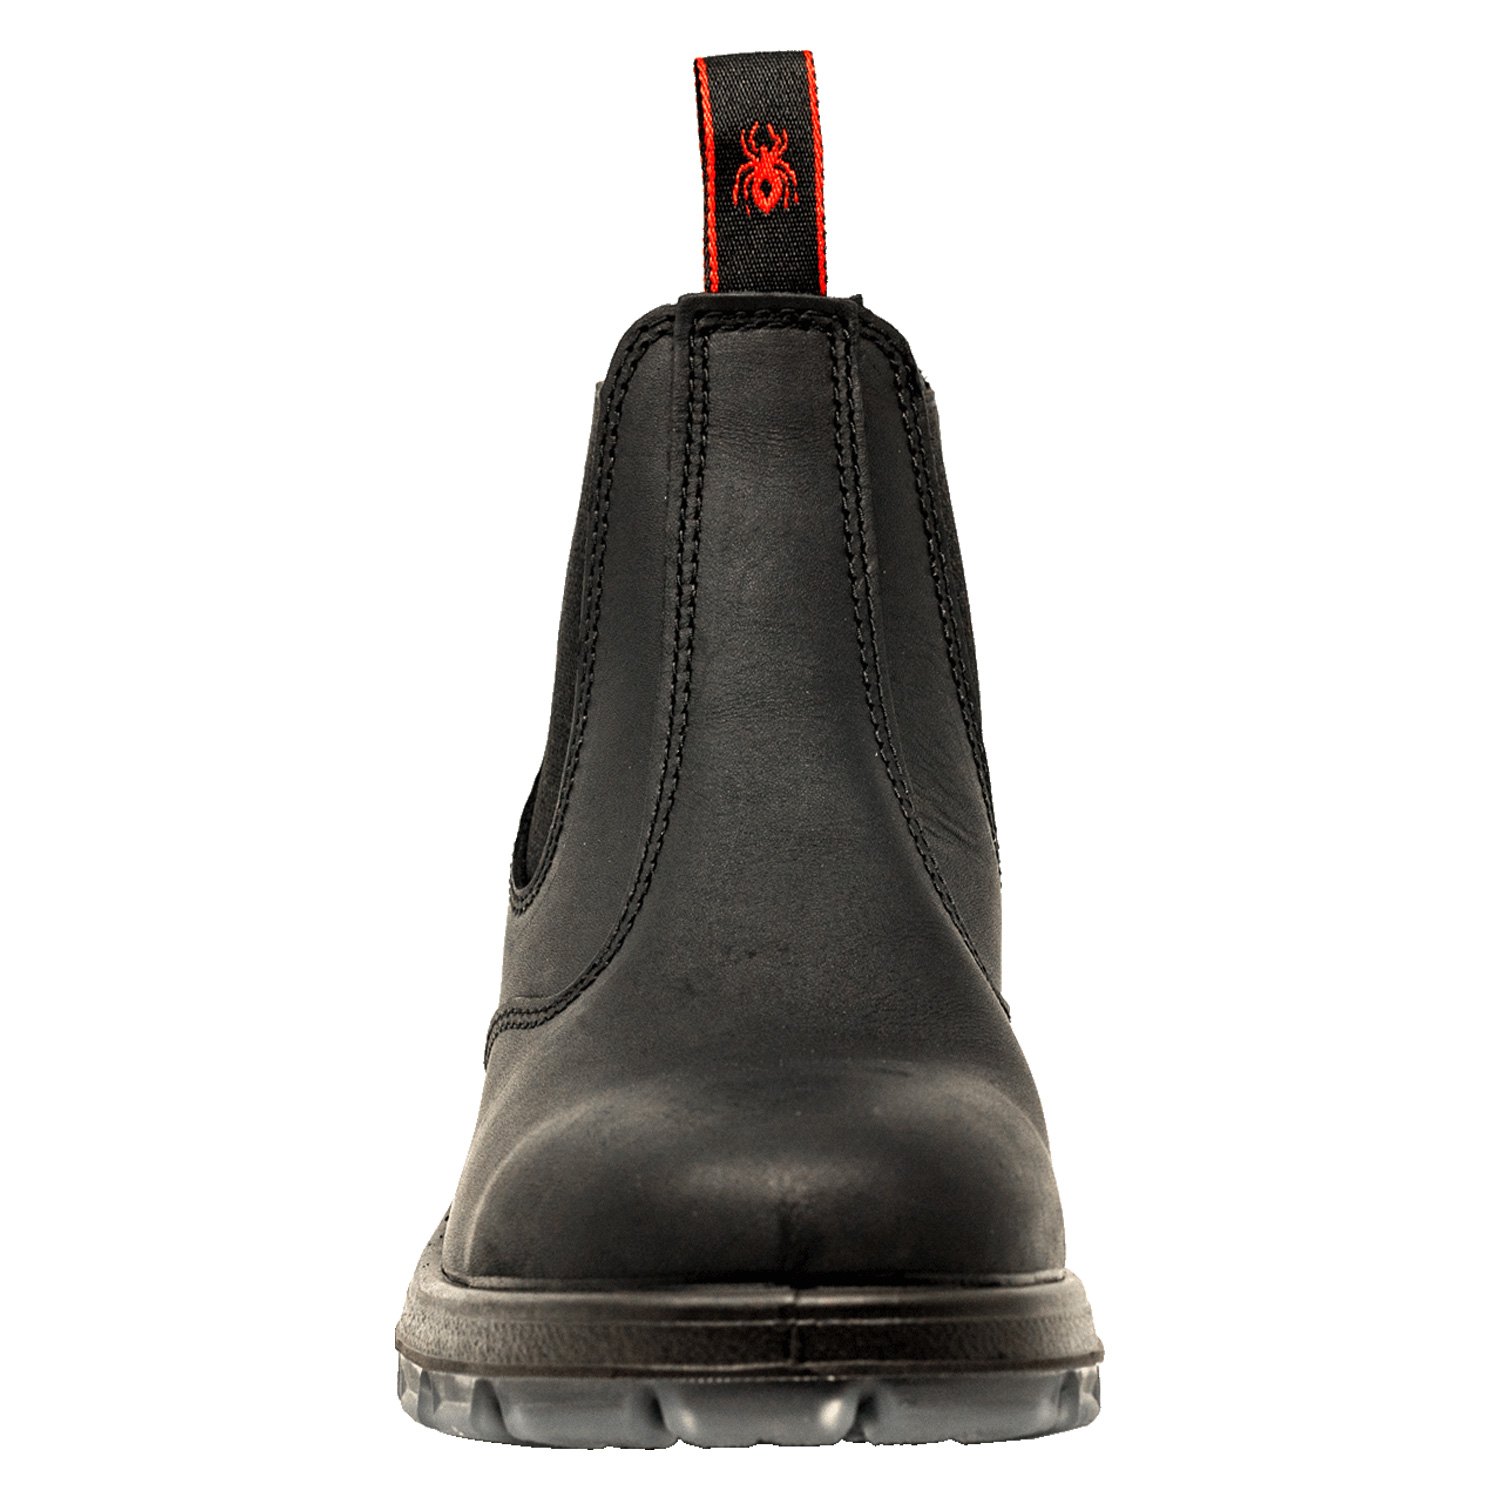 redback boots steel toe